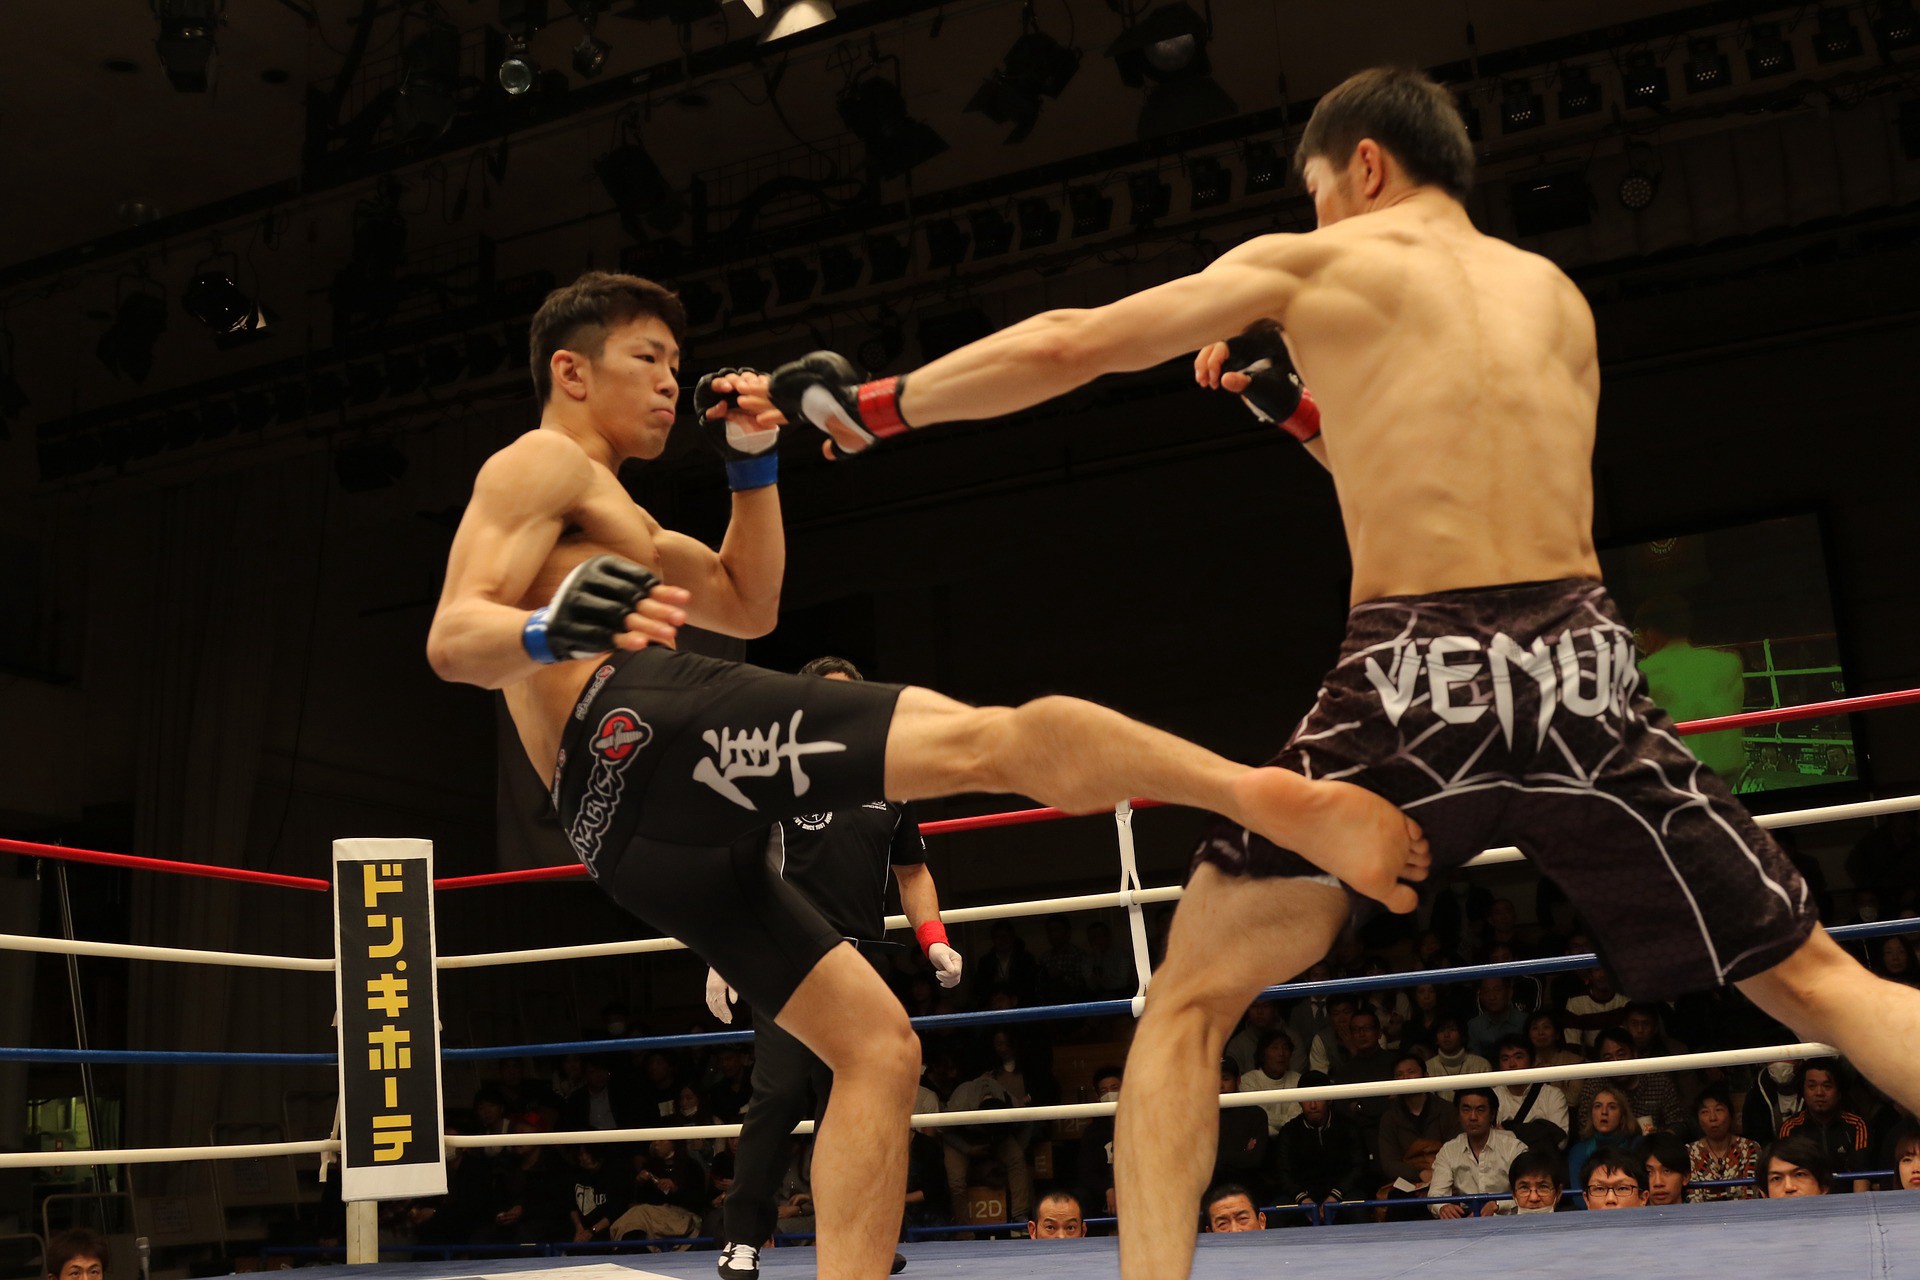 MMA fighter landing a leg kick on his opponent